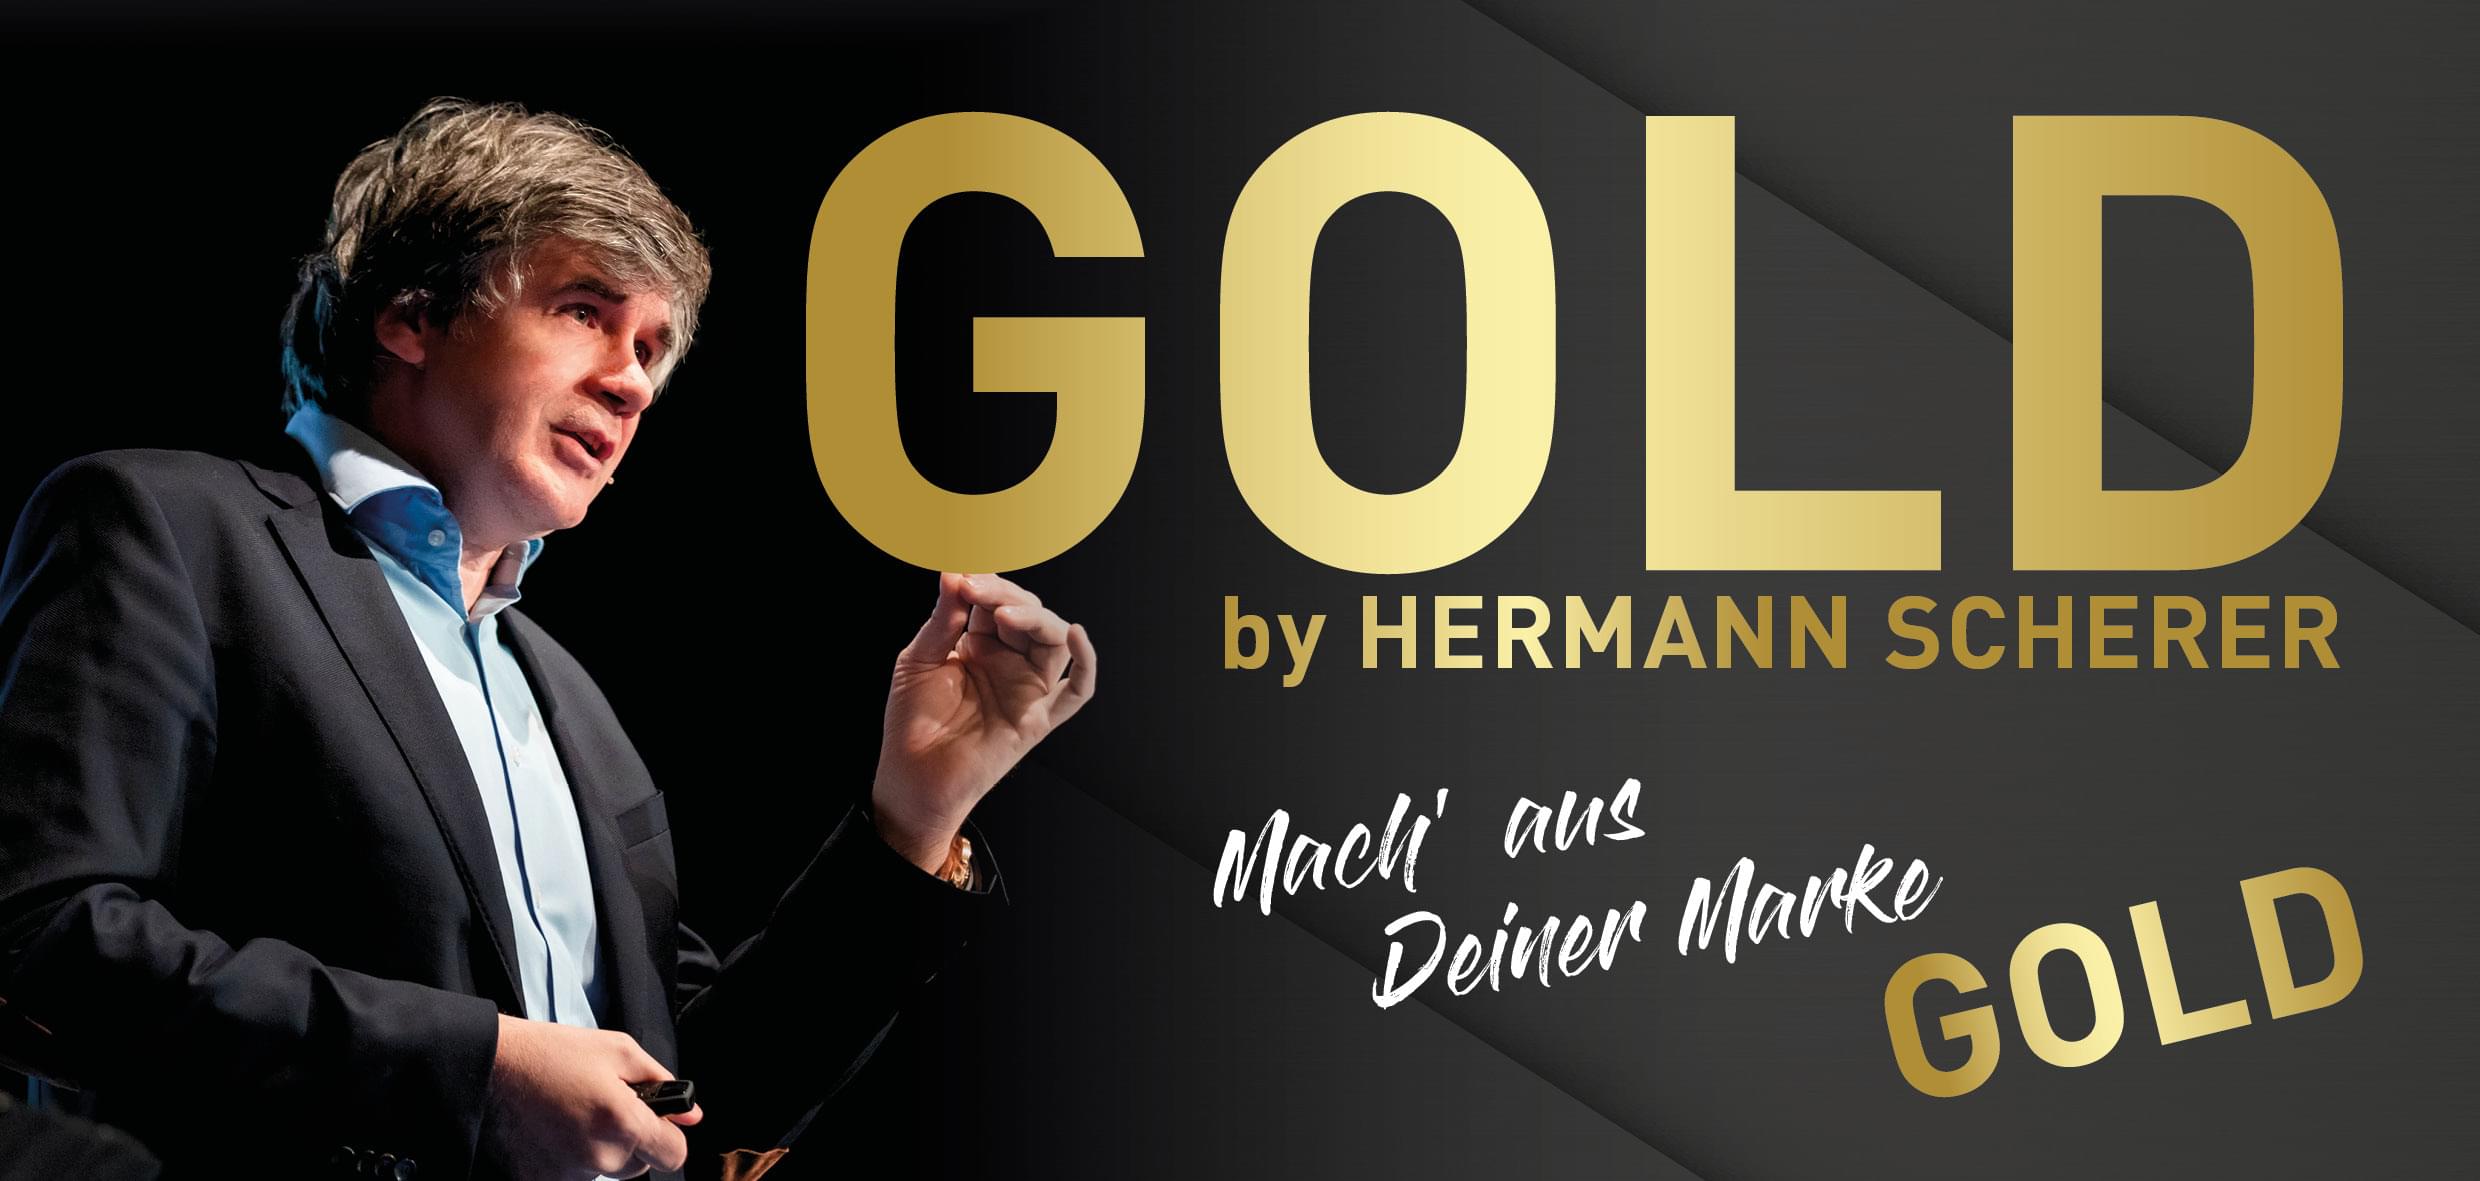 hermann scherer gold banner